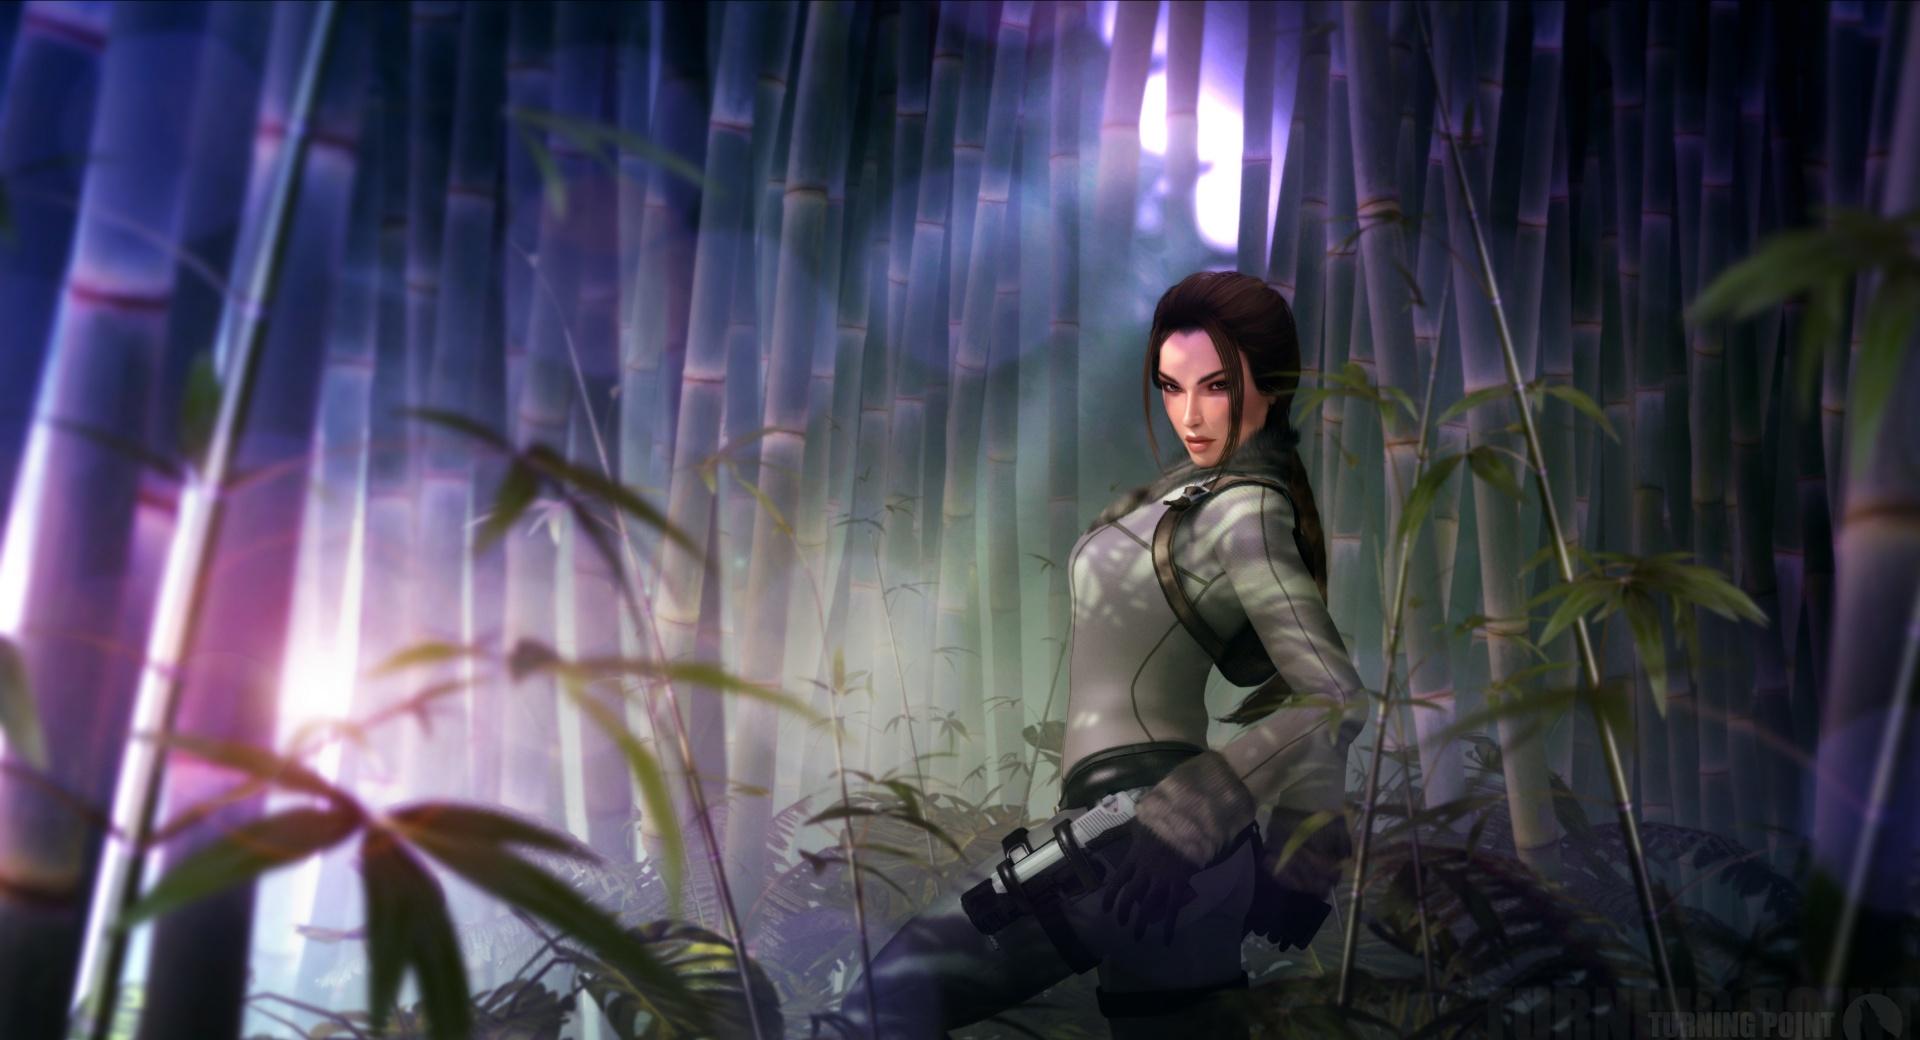 Lara Croft FanArt at 1280 x 960 size wallpapers HD quality